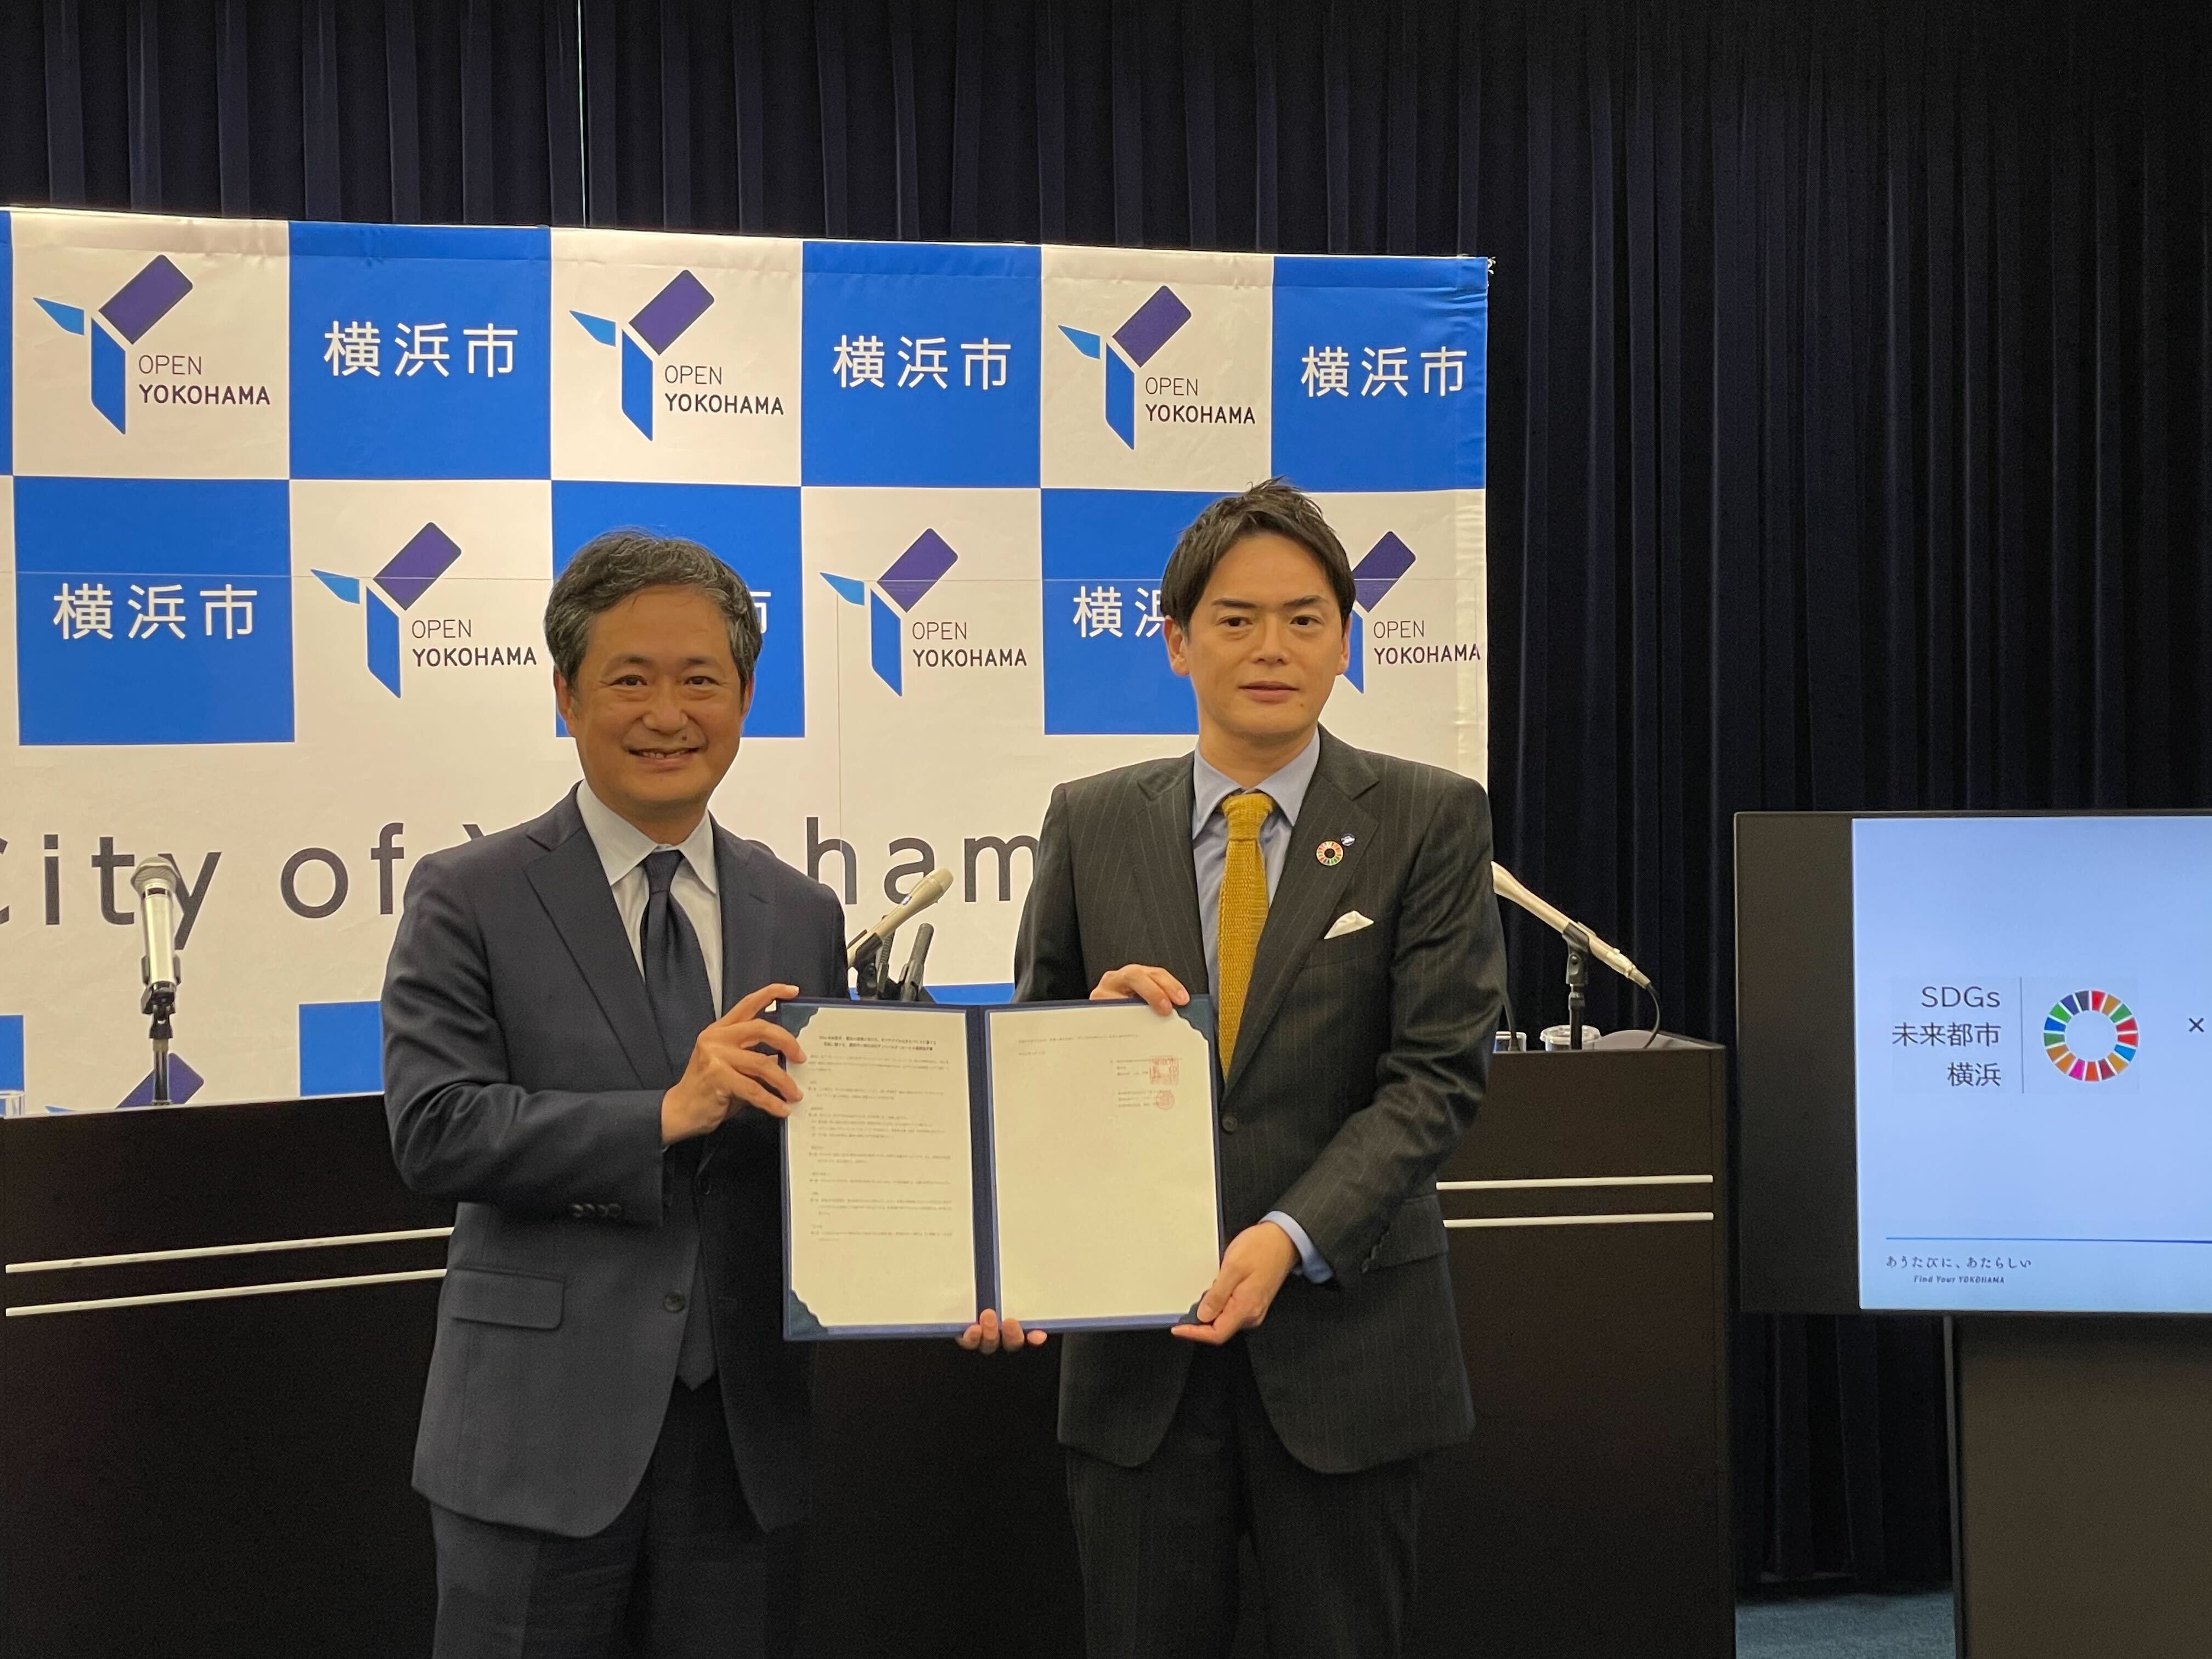 Partnership Agreement with the City of Yokohama